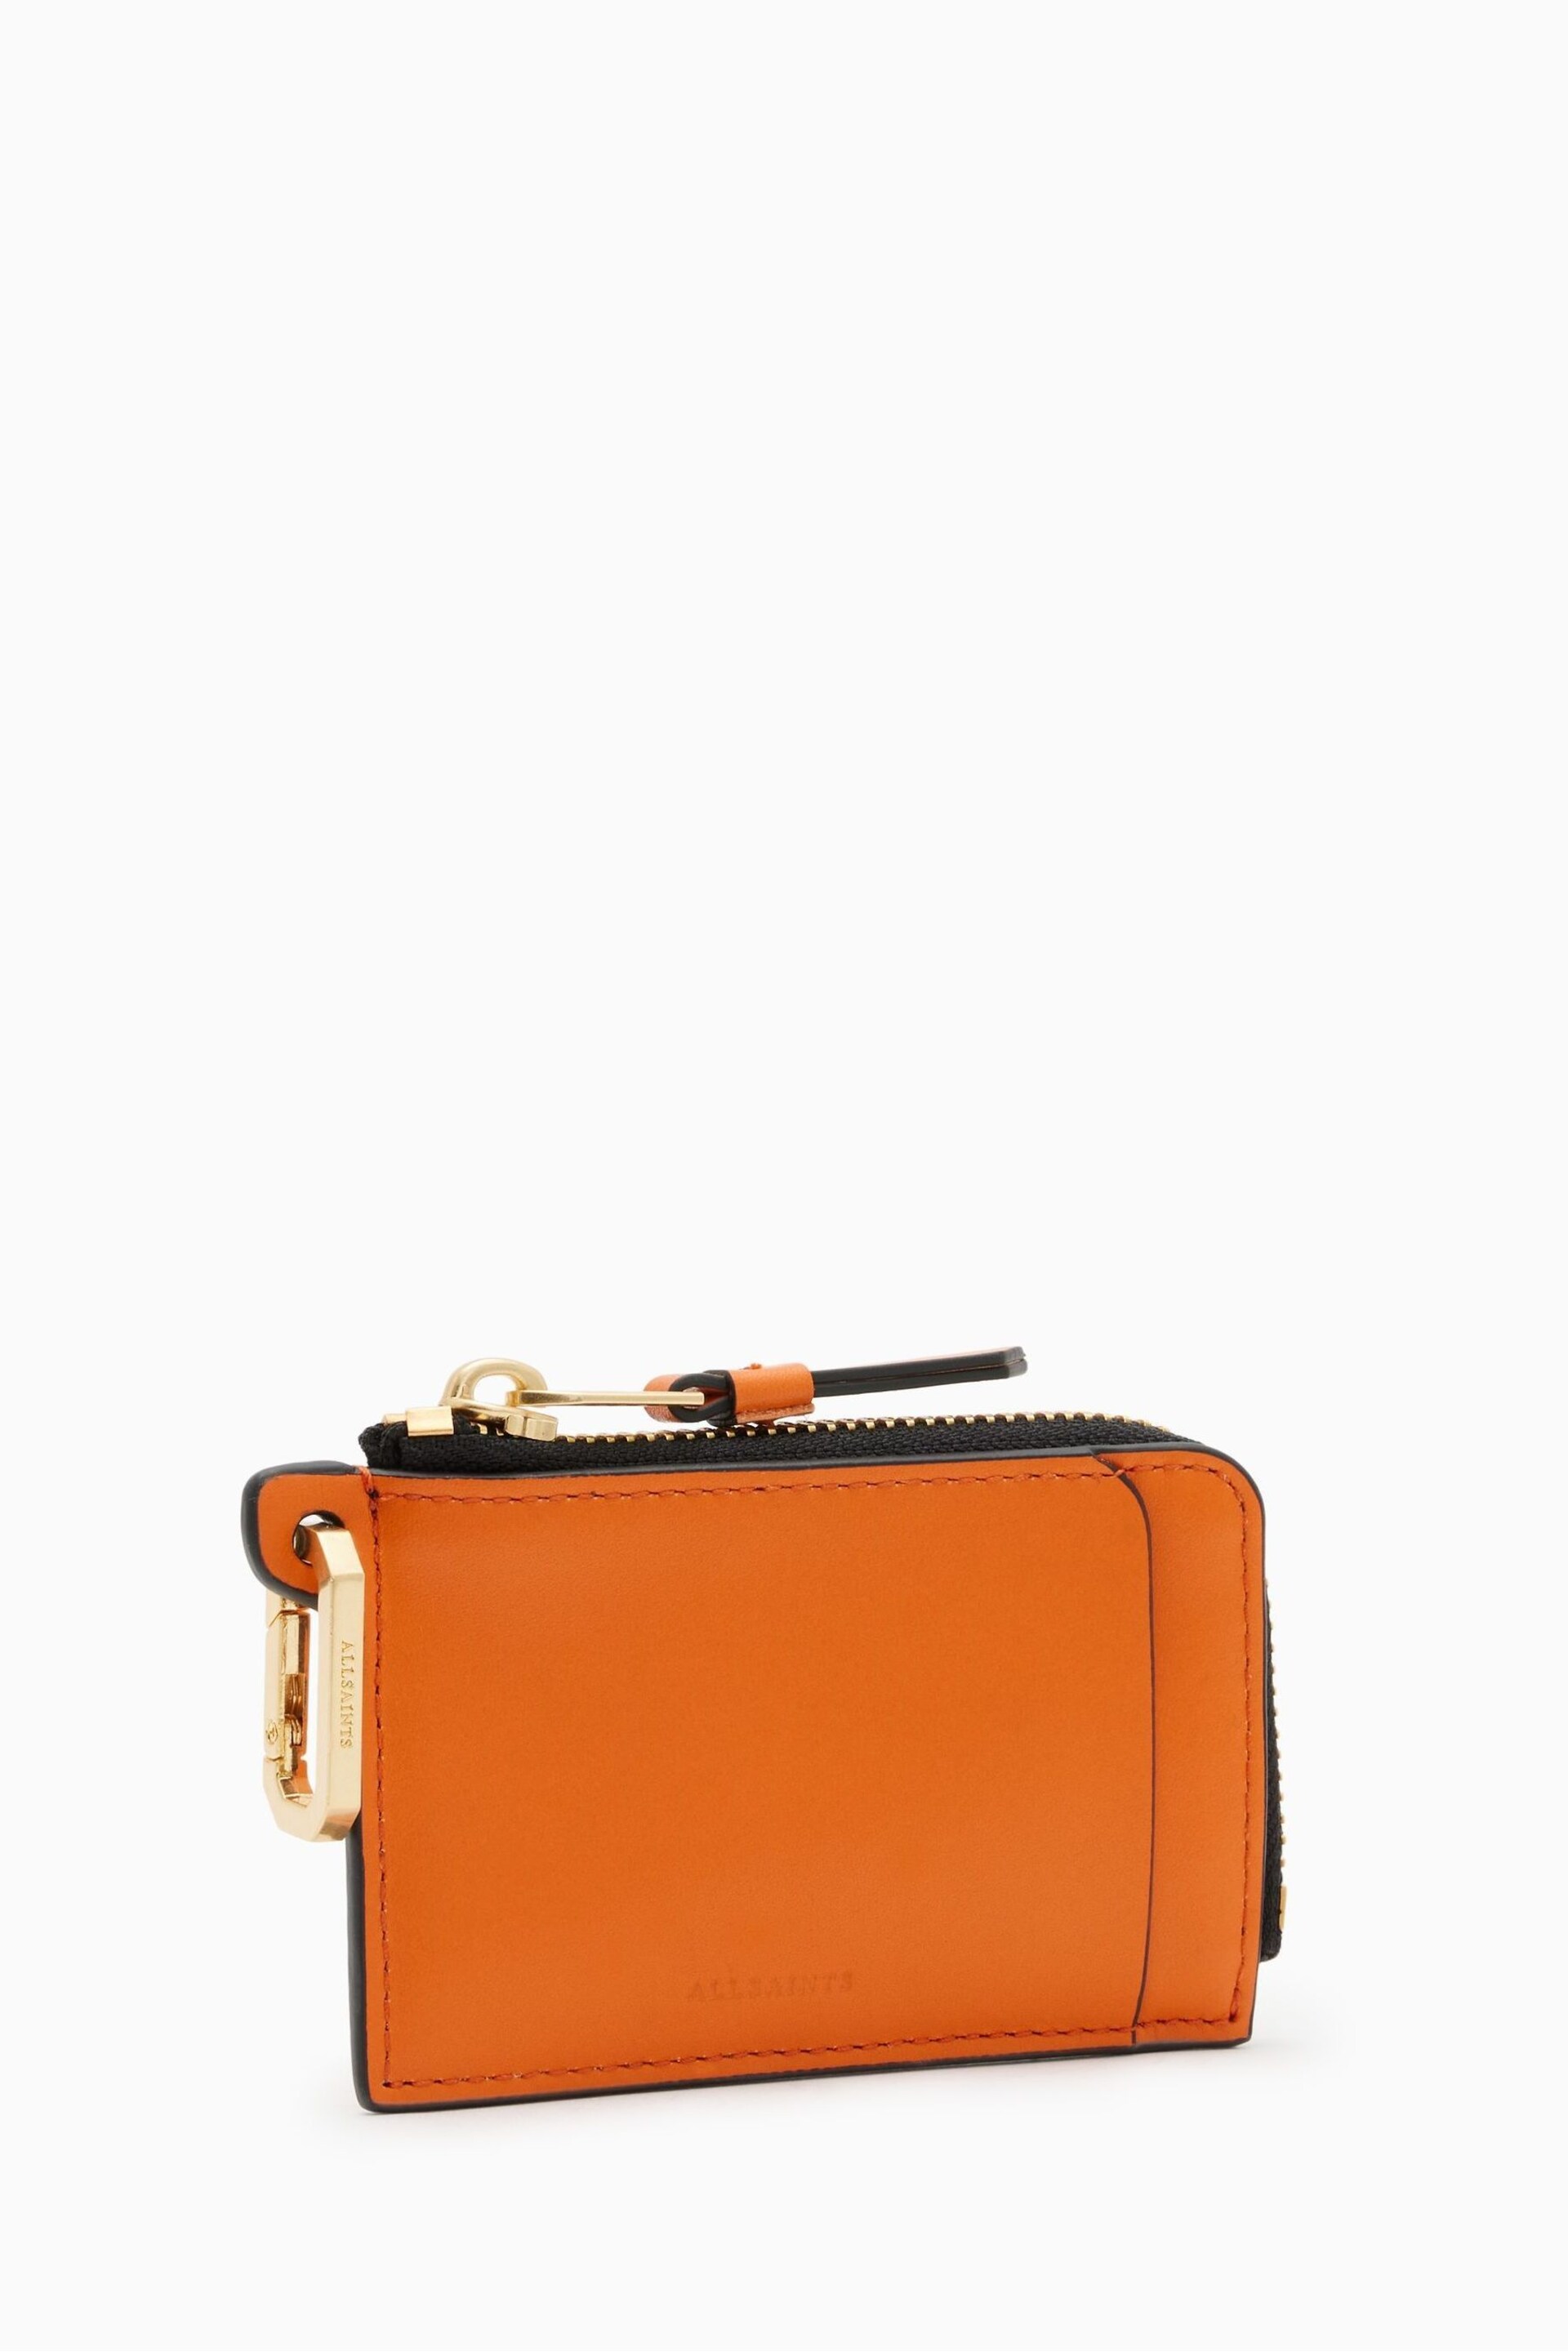 AllSaints Orange Remy Wallet - Image 3 of 6